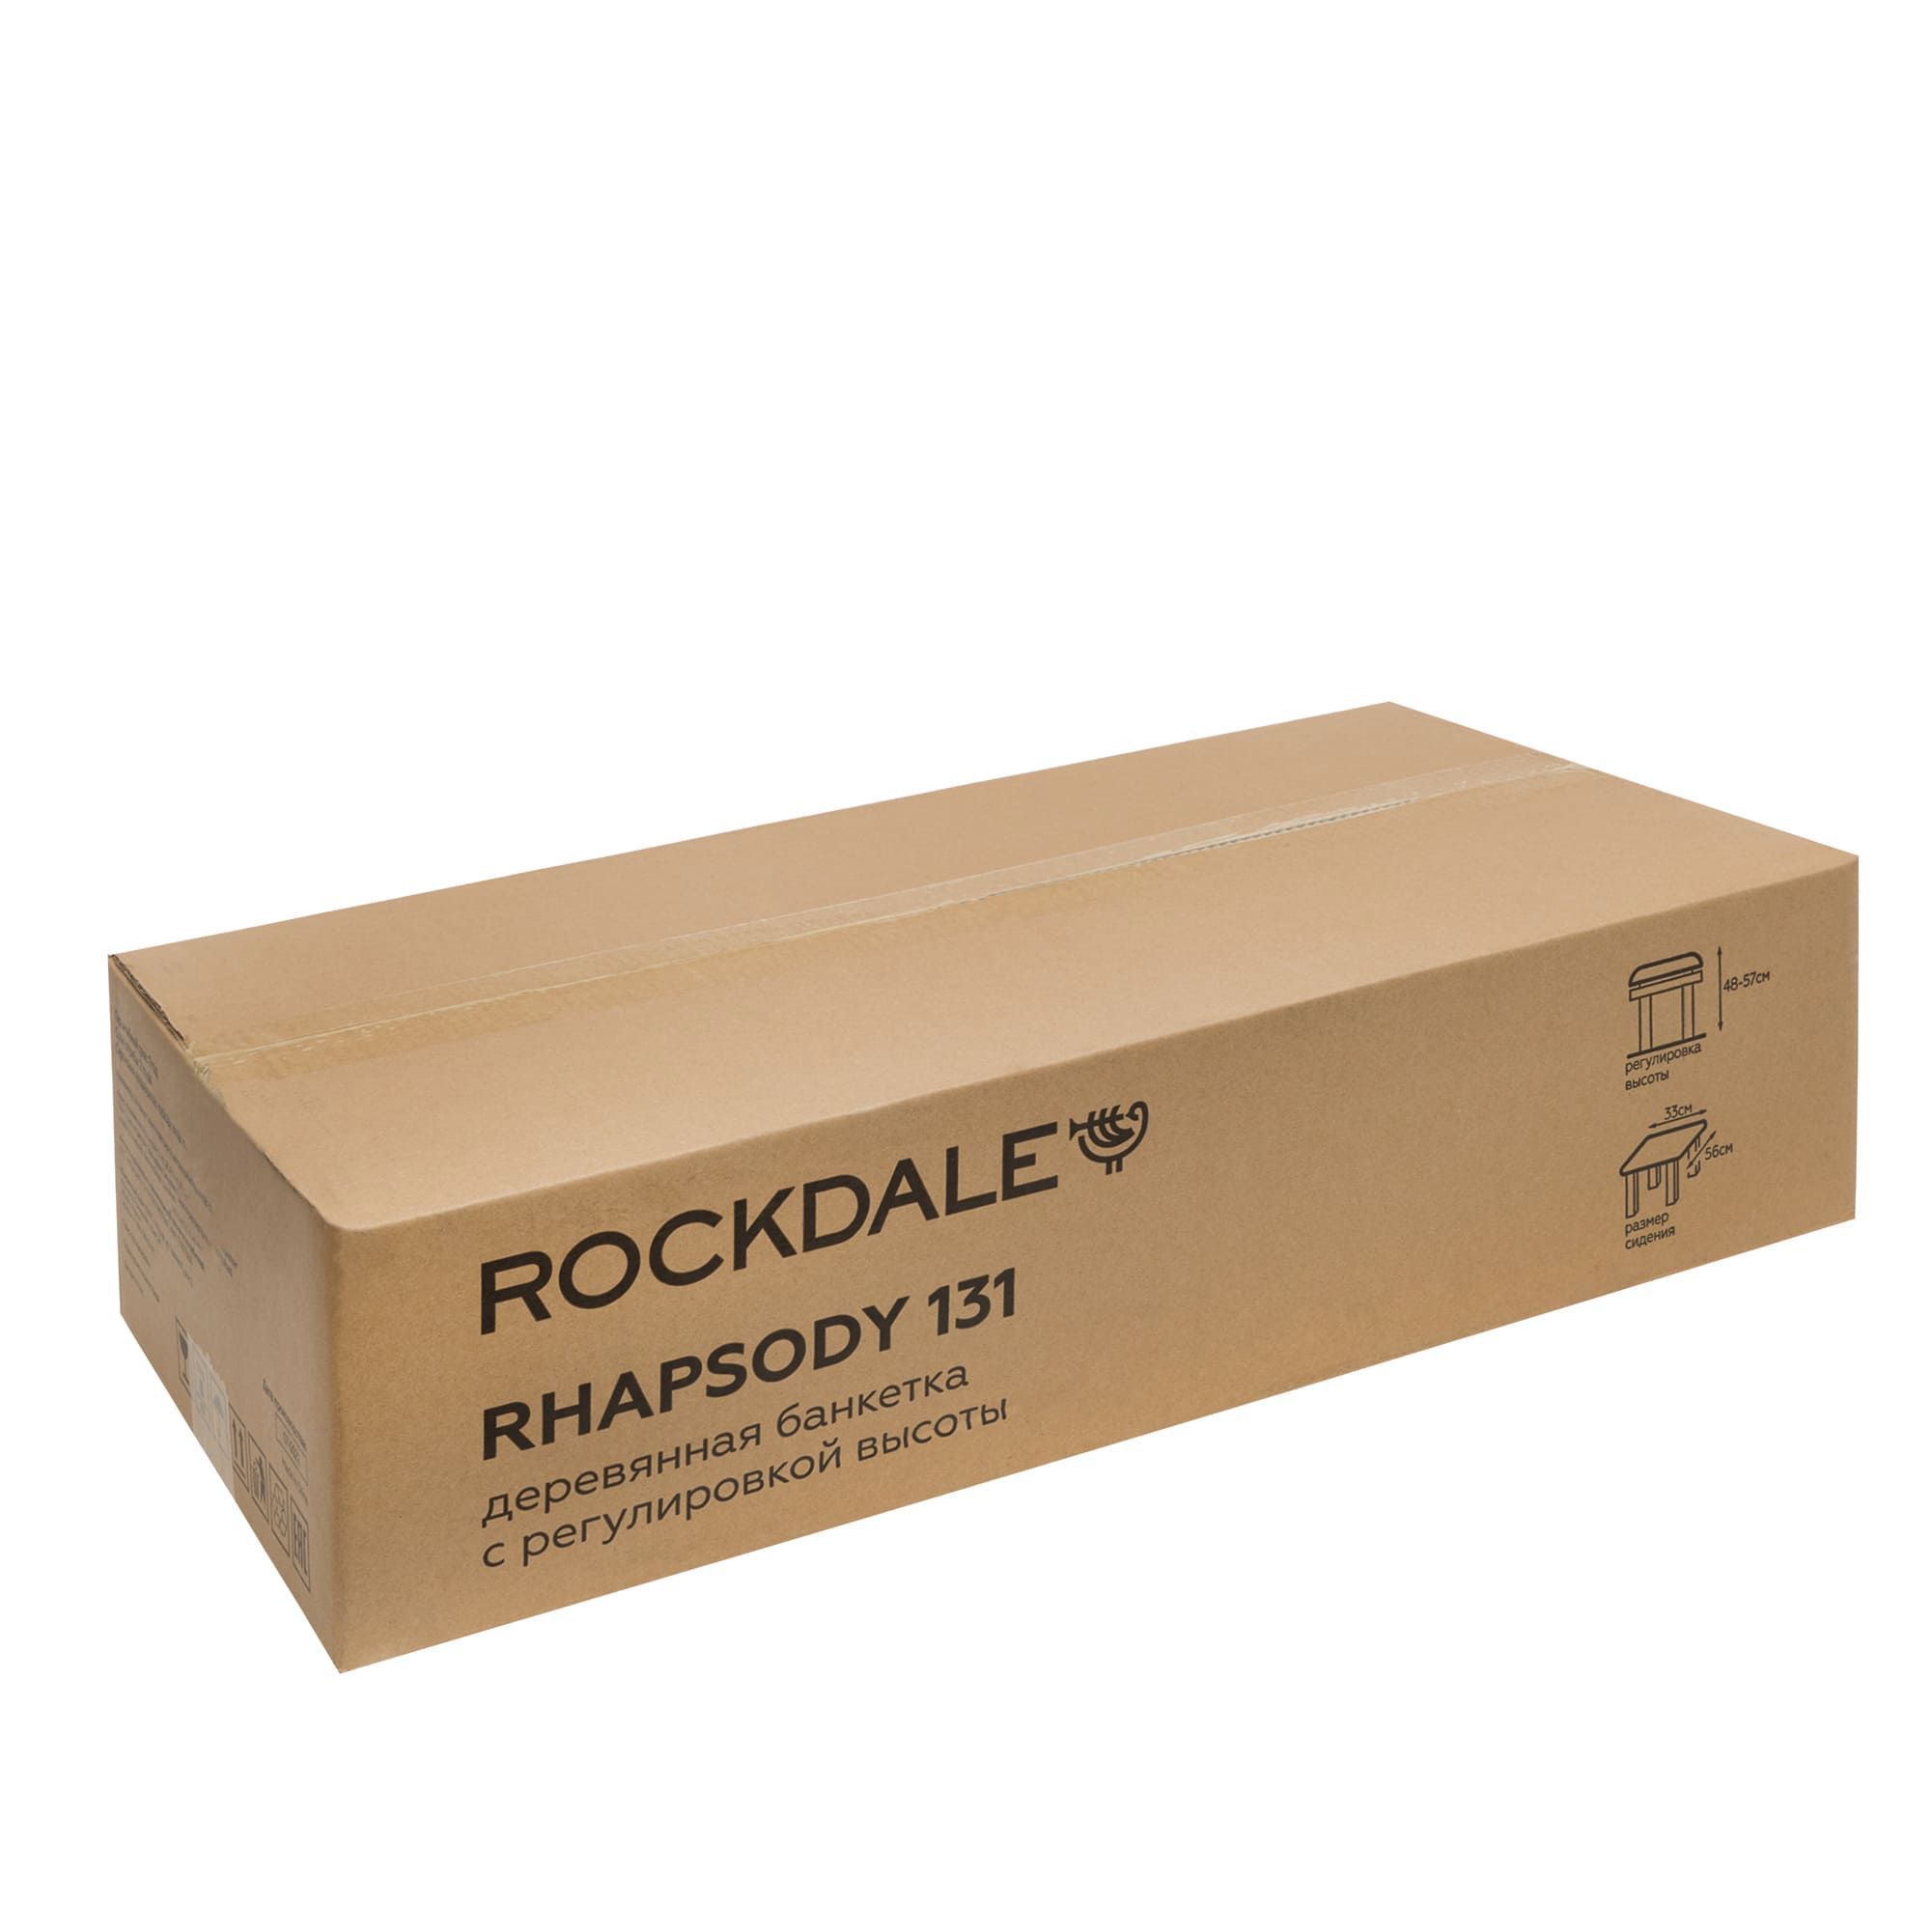 Rockdale RHAPSODY 131 SV WHITE GREEN Банкетки для клавишных инструментов